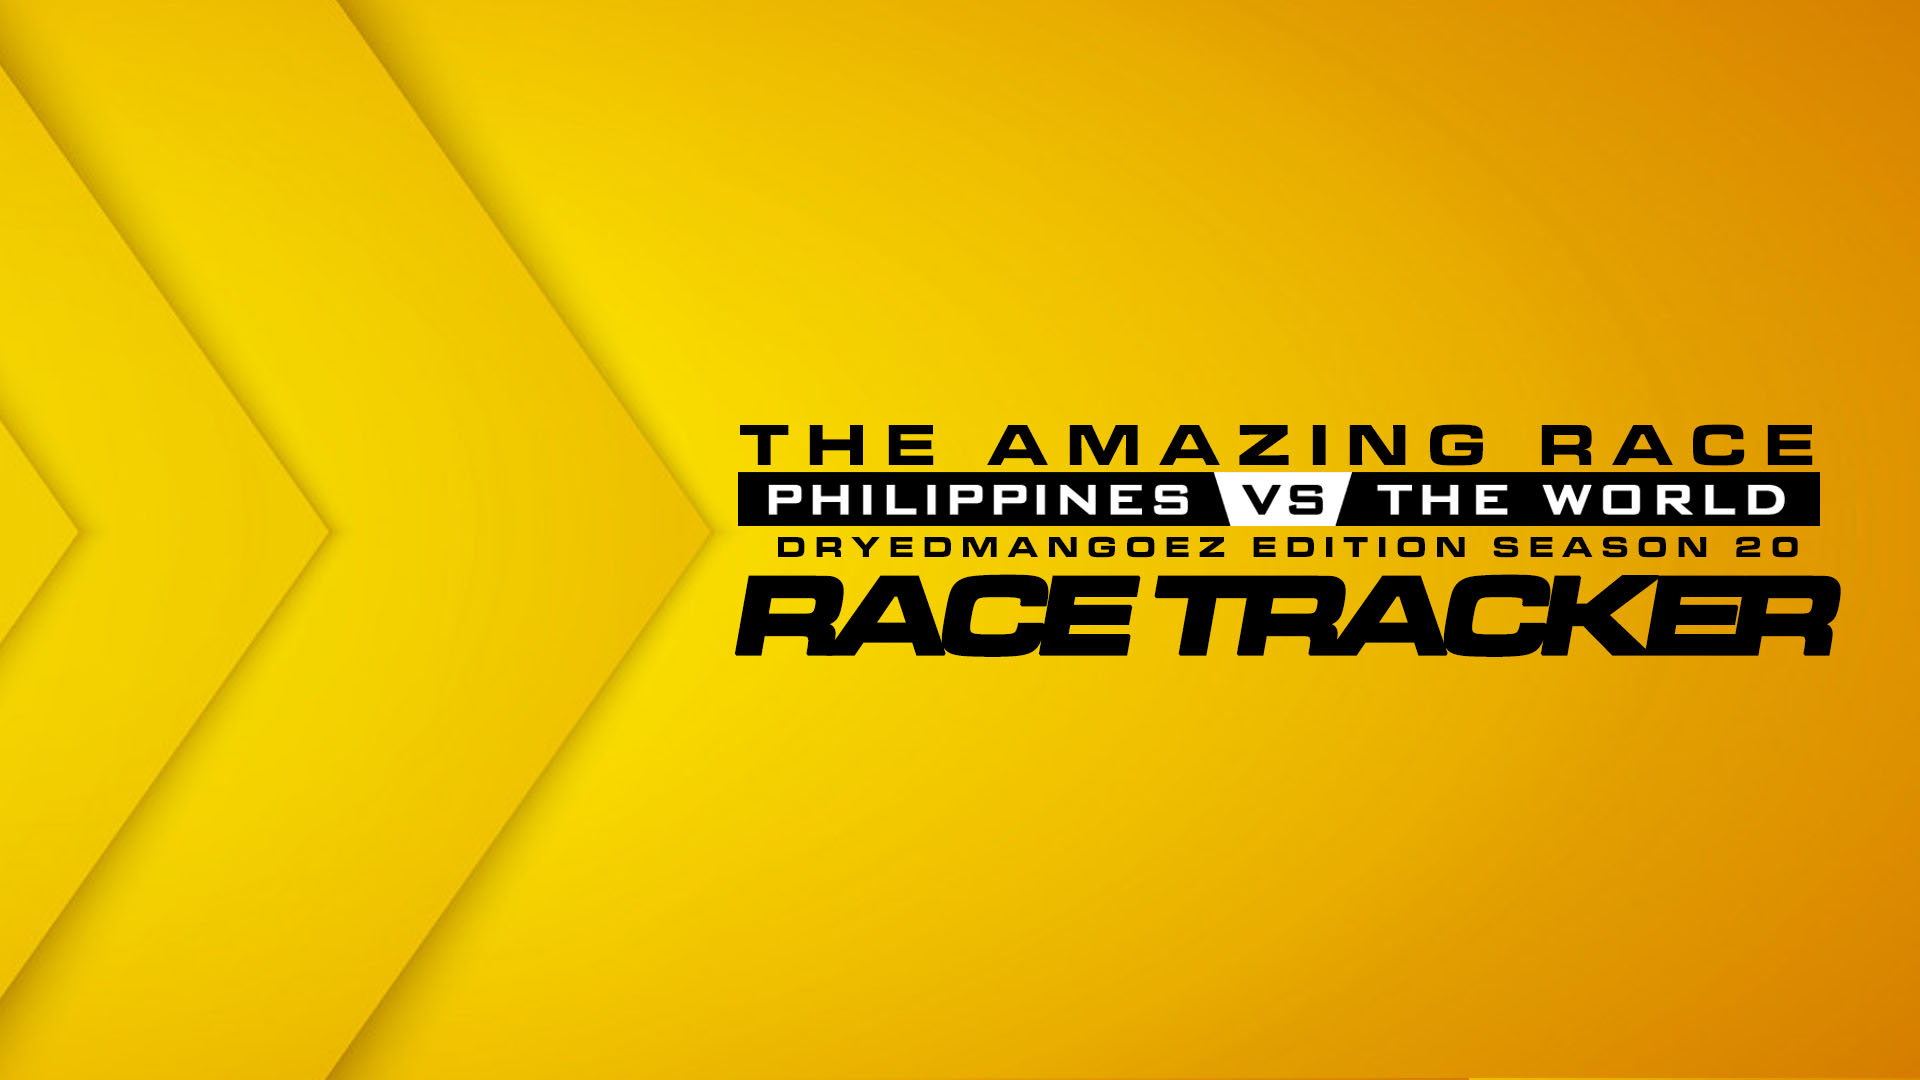 The Amazing Race Philippines vs The World Race Tracker